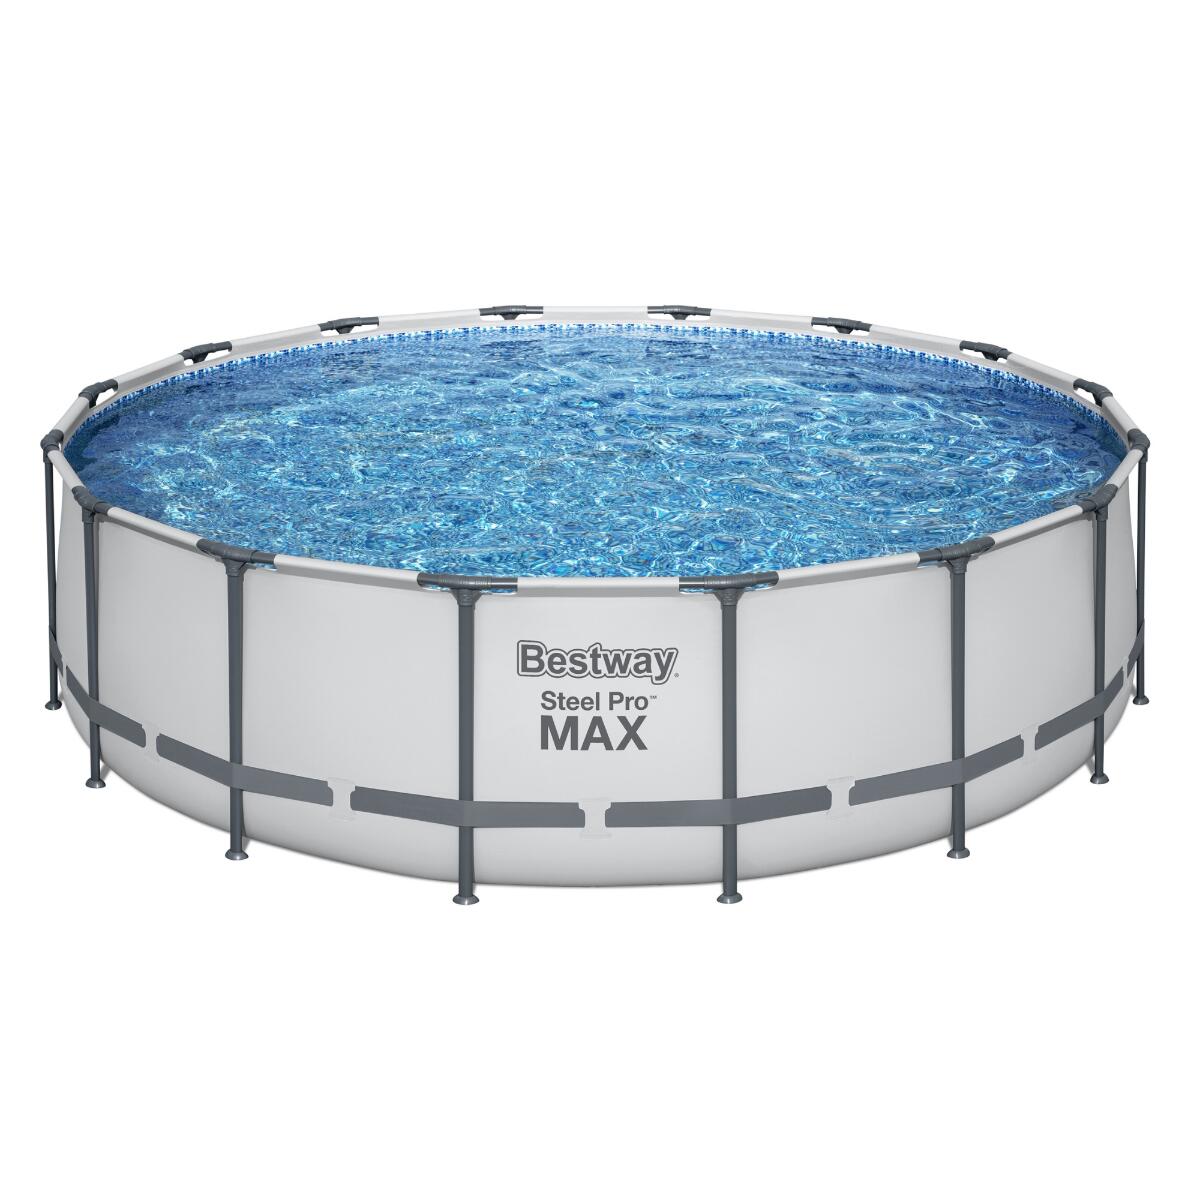 BESTWAY Bestway Round Steel Pro MAX Grey 16ft x 48" Above Ground Swimming Pool